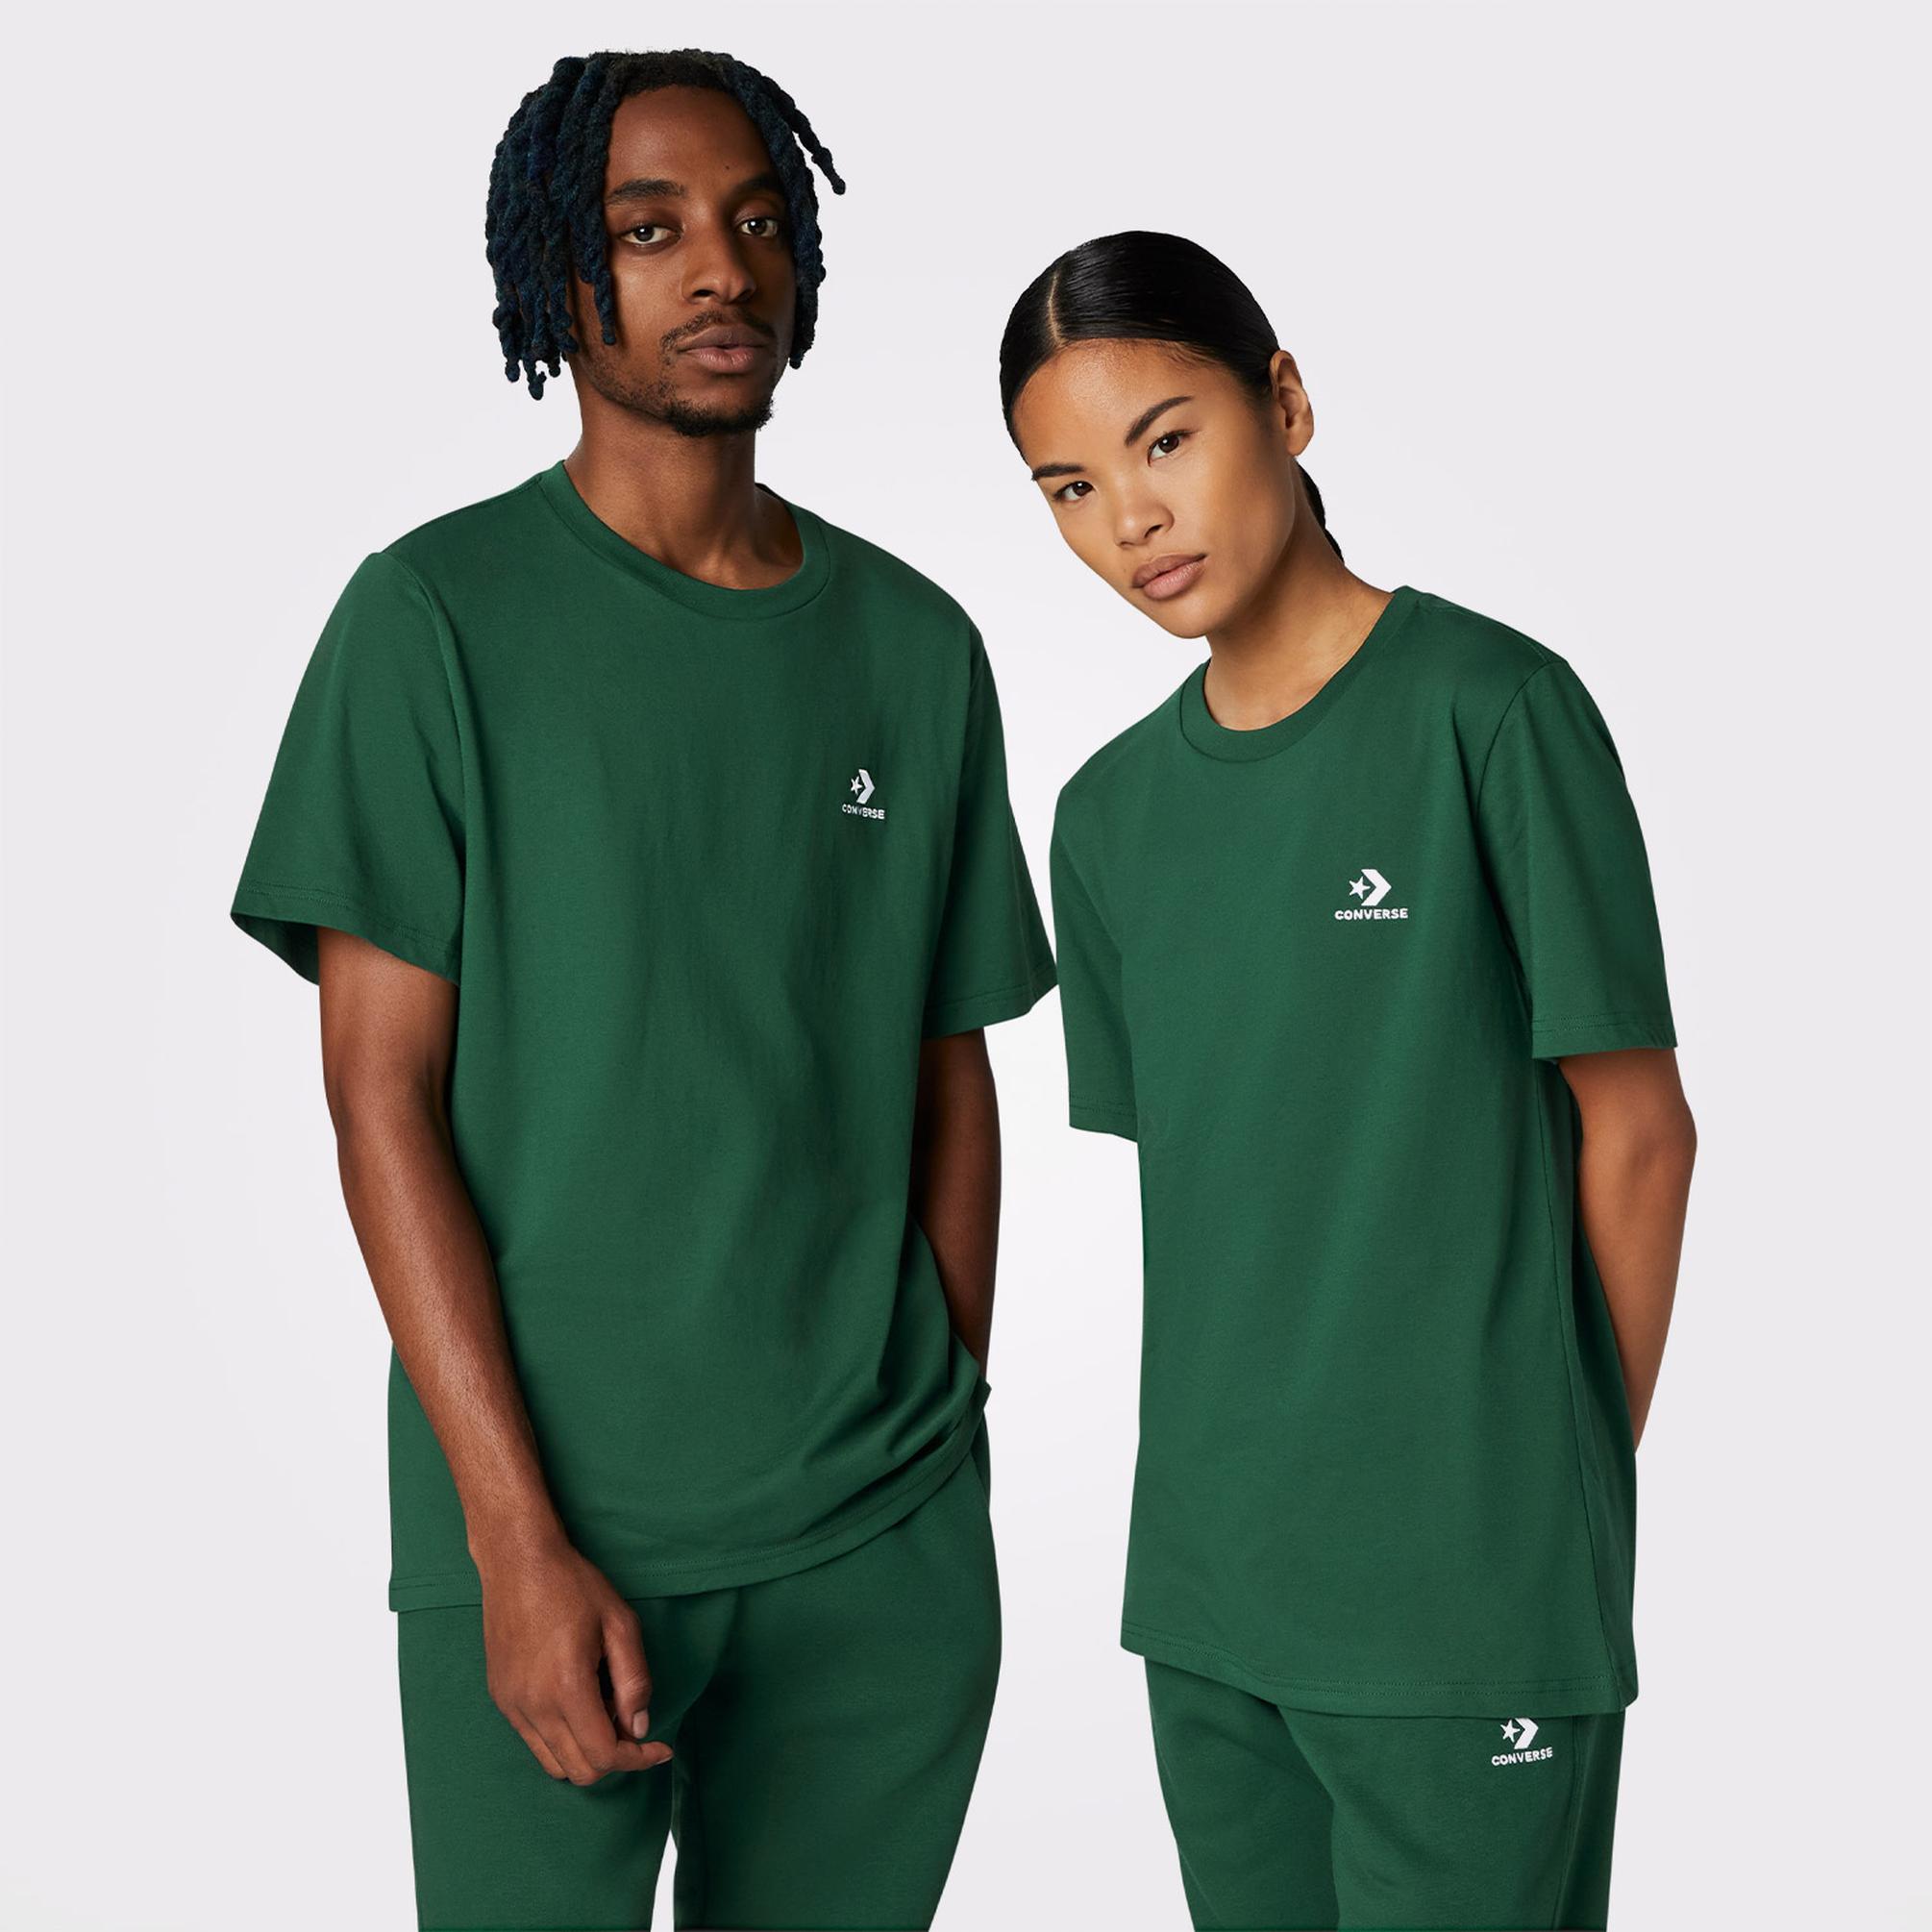  Converse Go-To Embroidered Star Chevron Unisex Yeşil T-Shirt